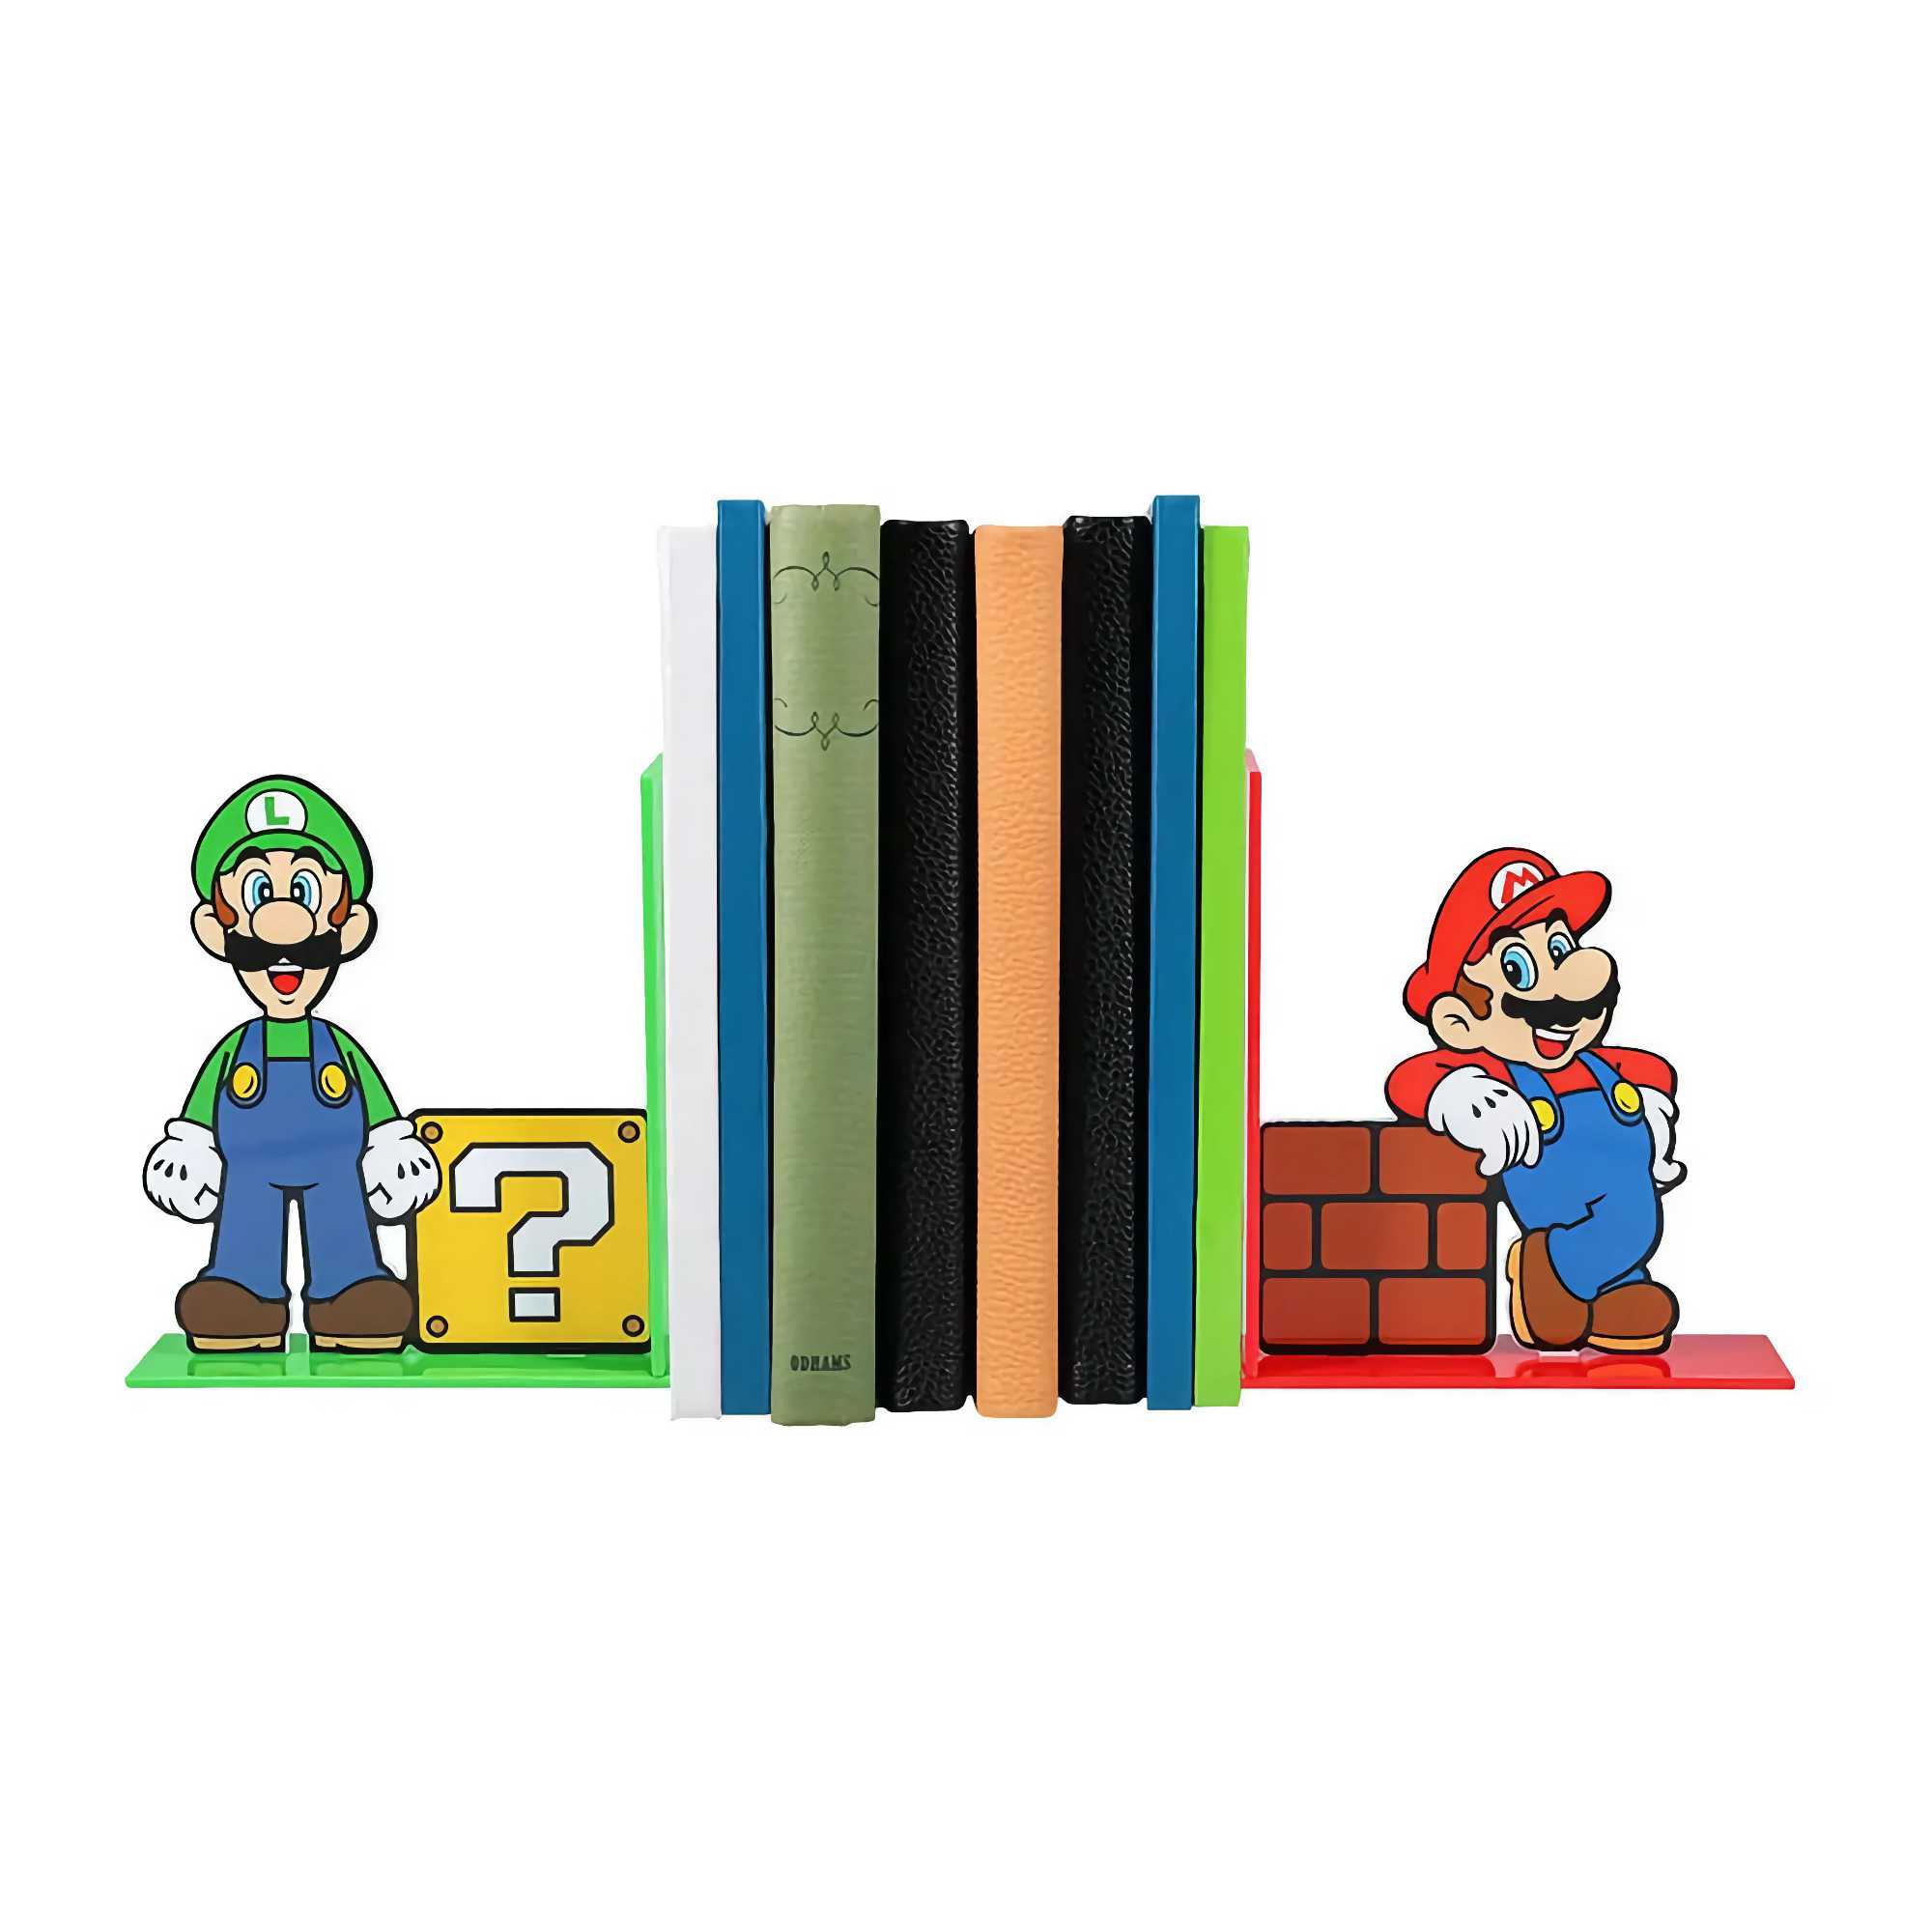 Nintendo Super Mario bookends Mario and Luigi